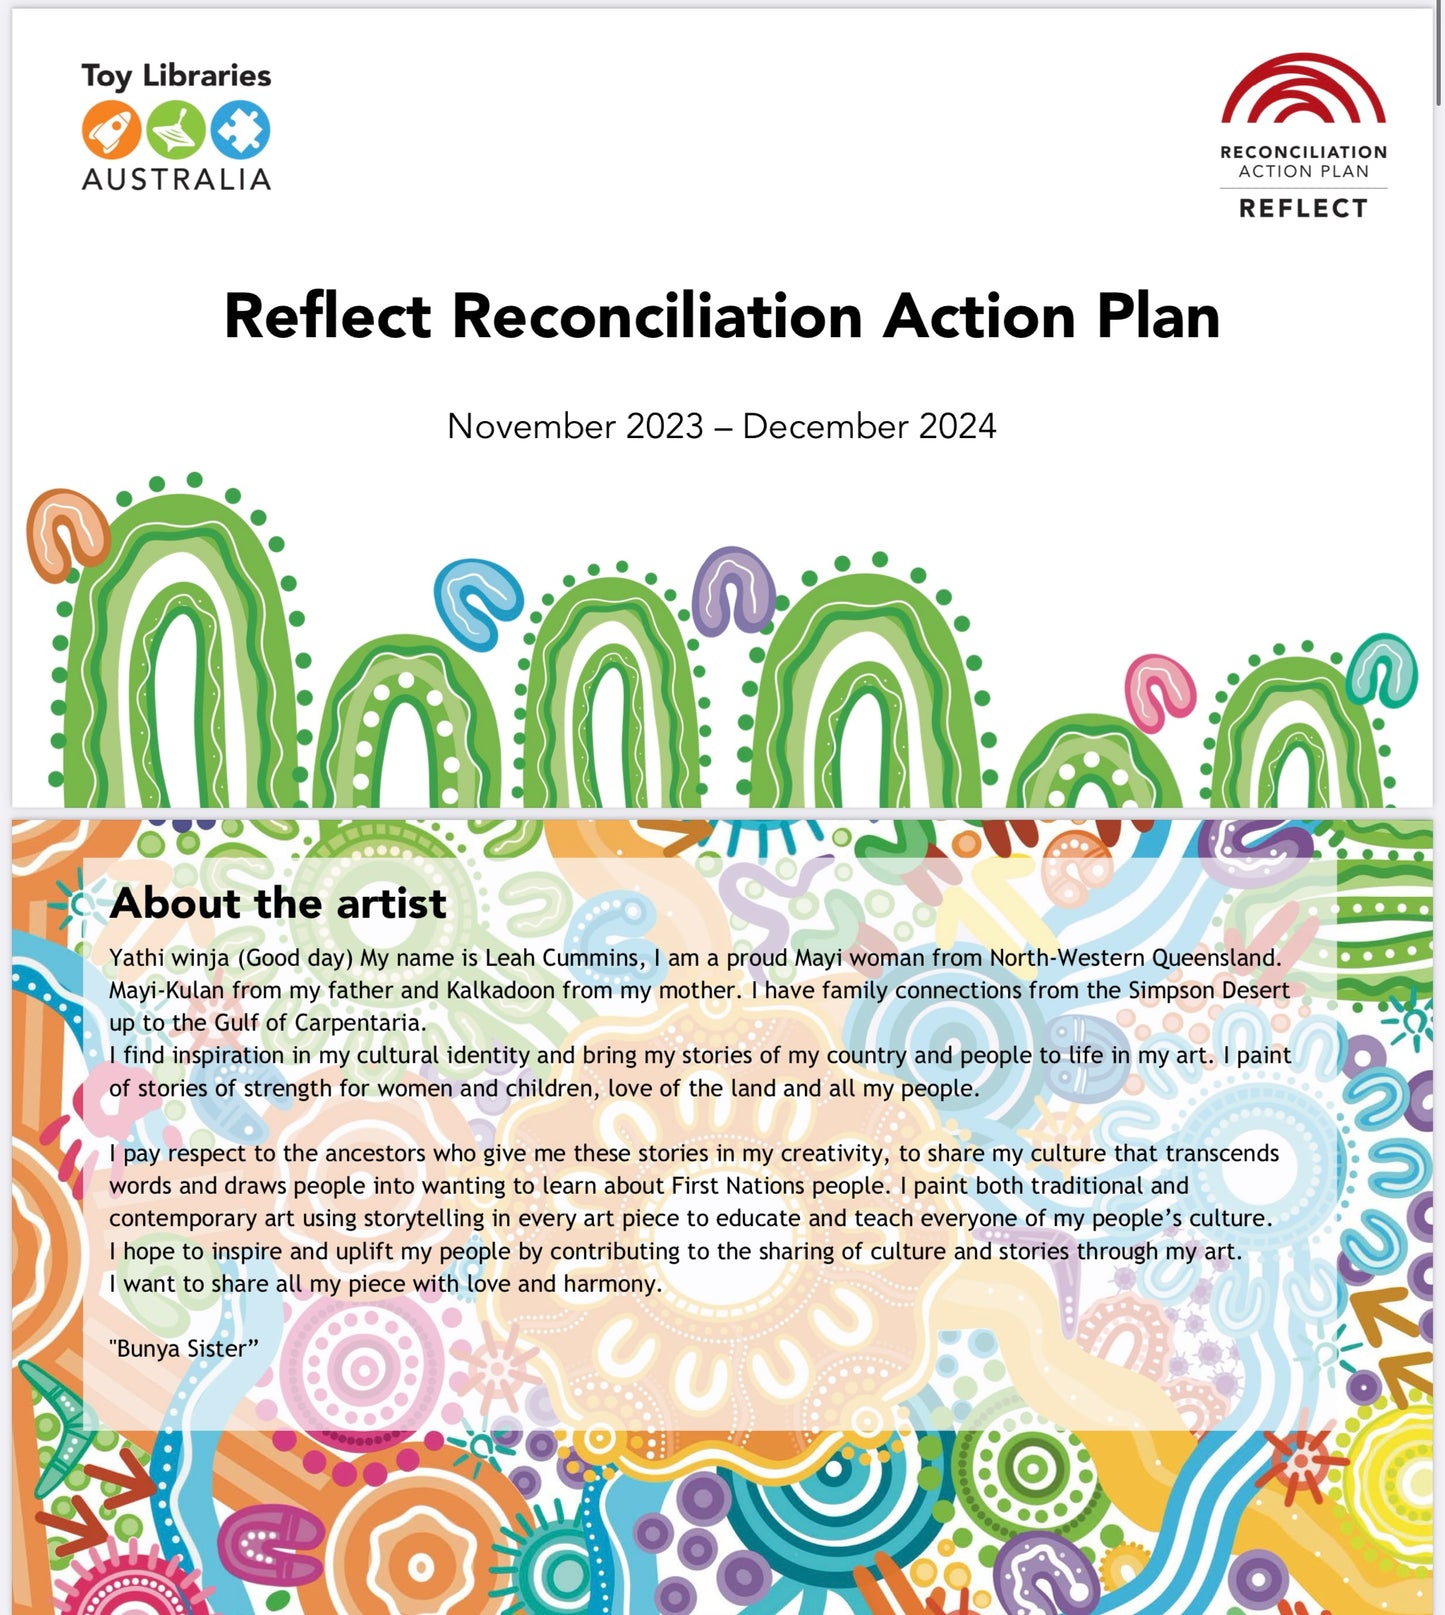 Toy Libraries Australia Reconciliation Action Plan